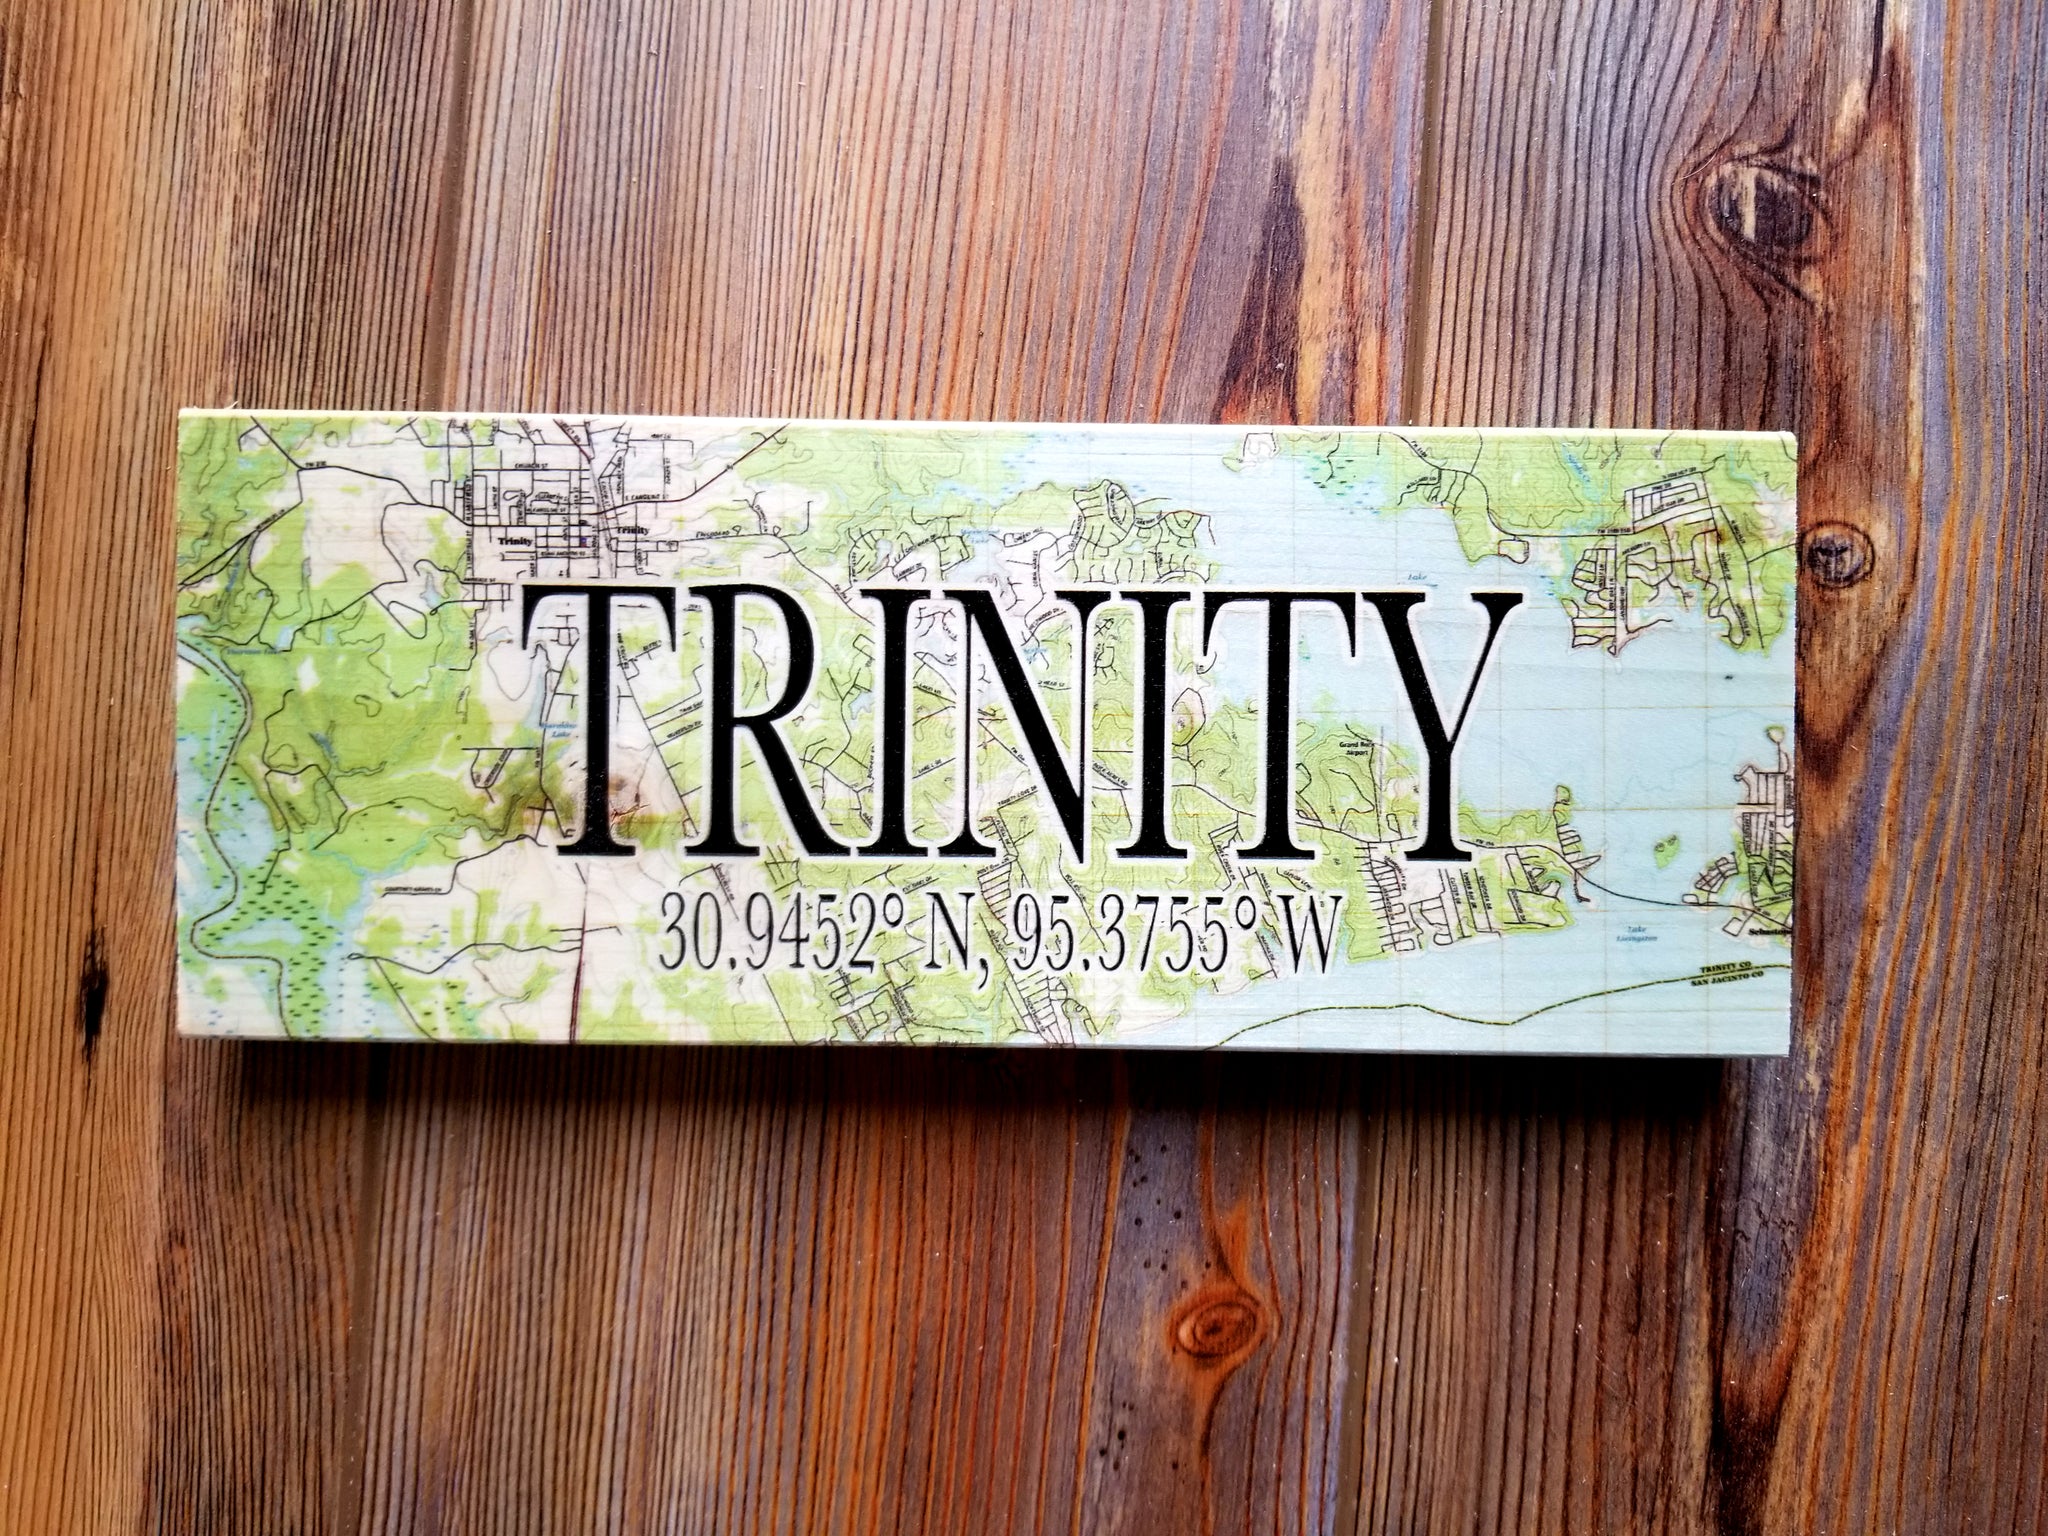 Trinity, TX Mini Coordinate Sign